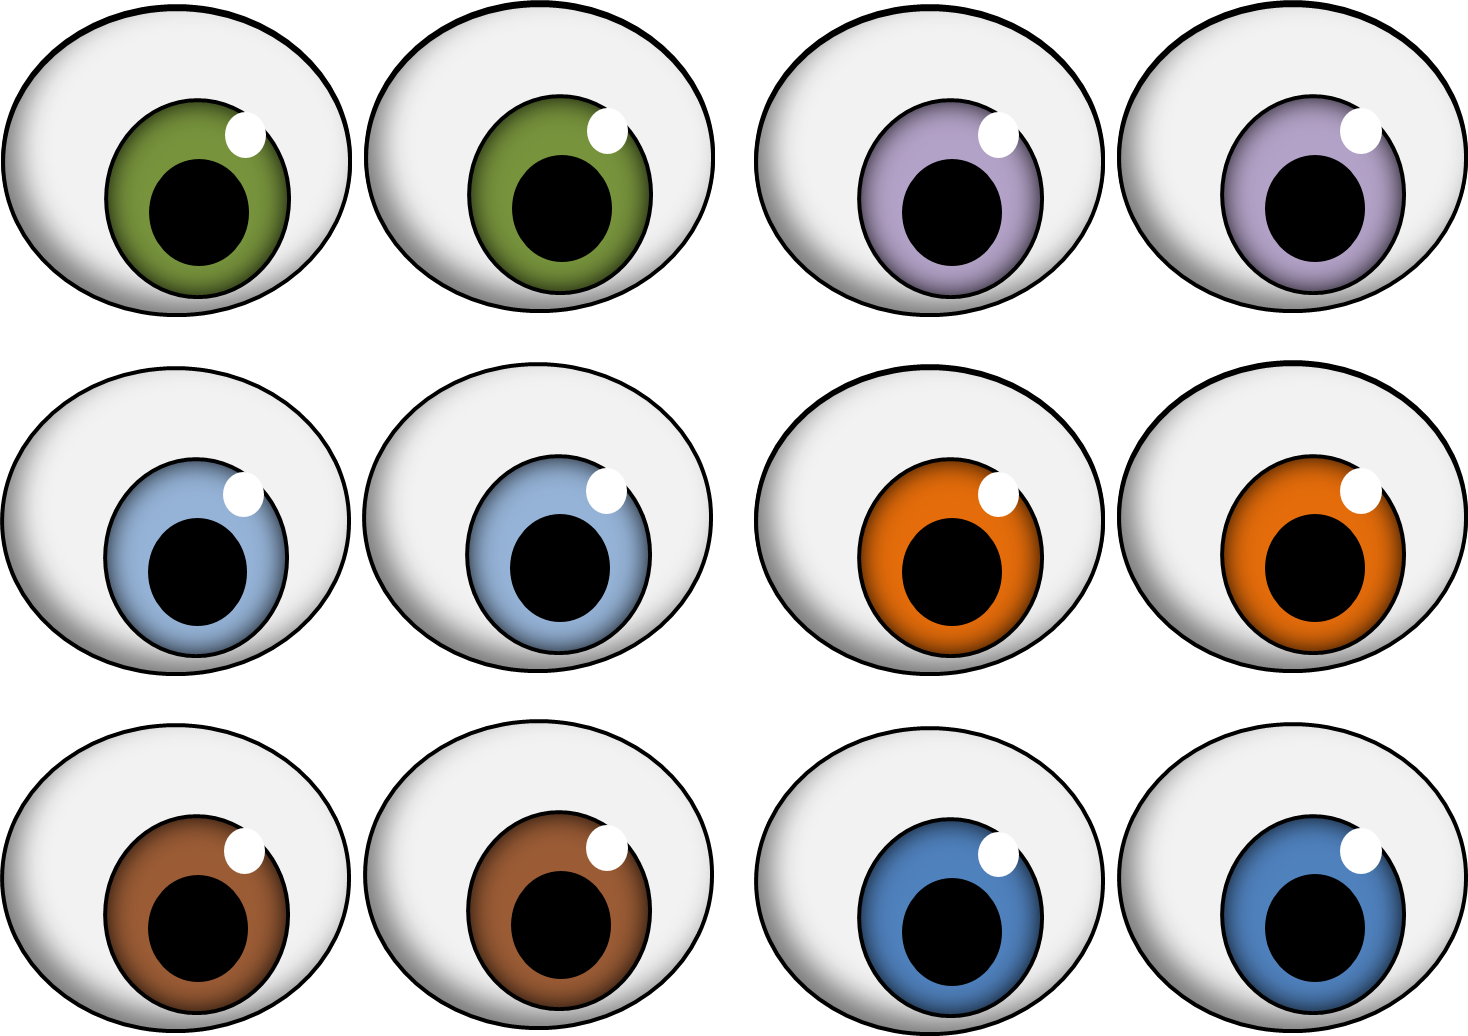 Googly eyes clipart - ClipartFox